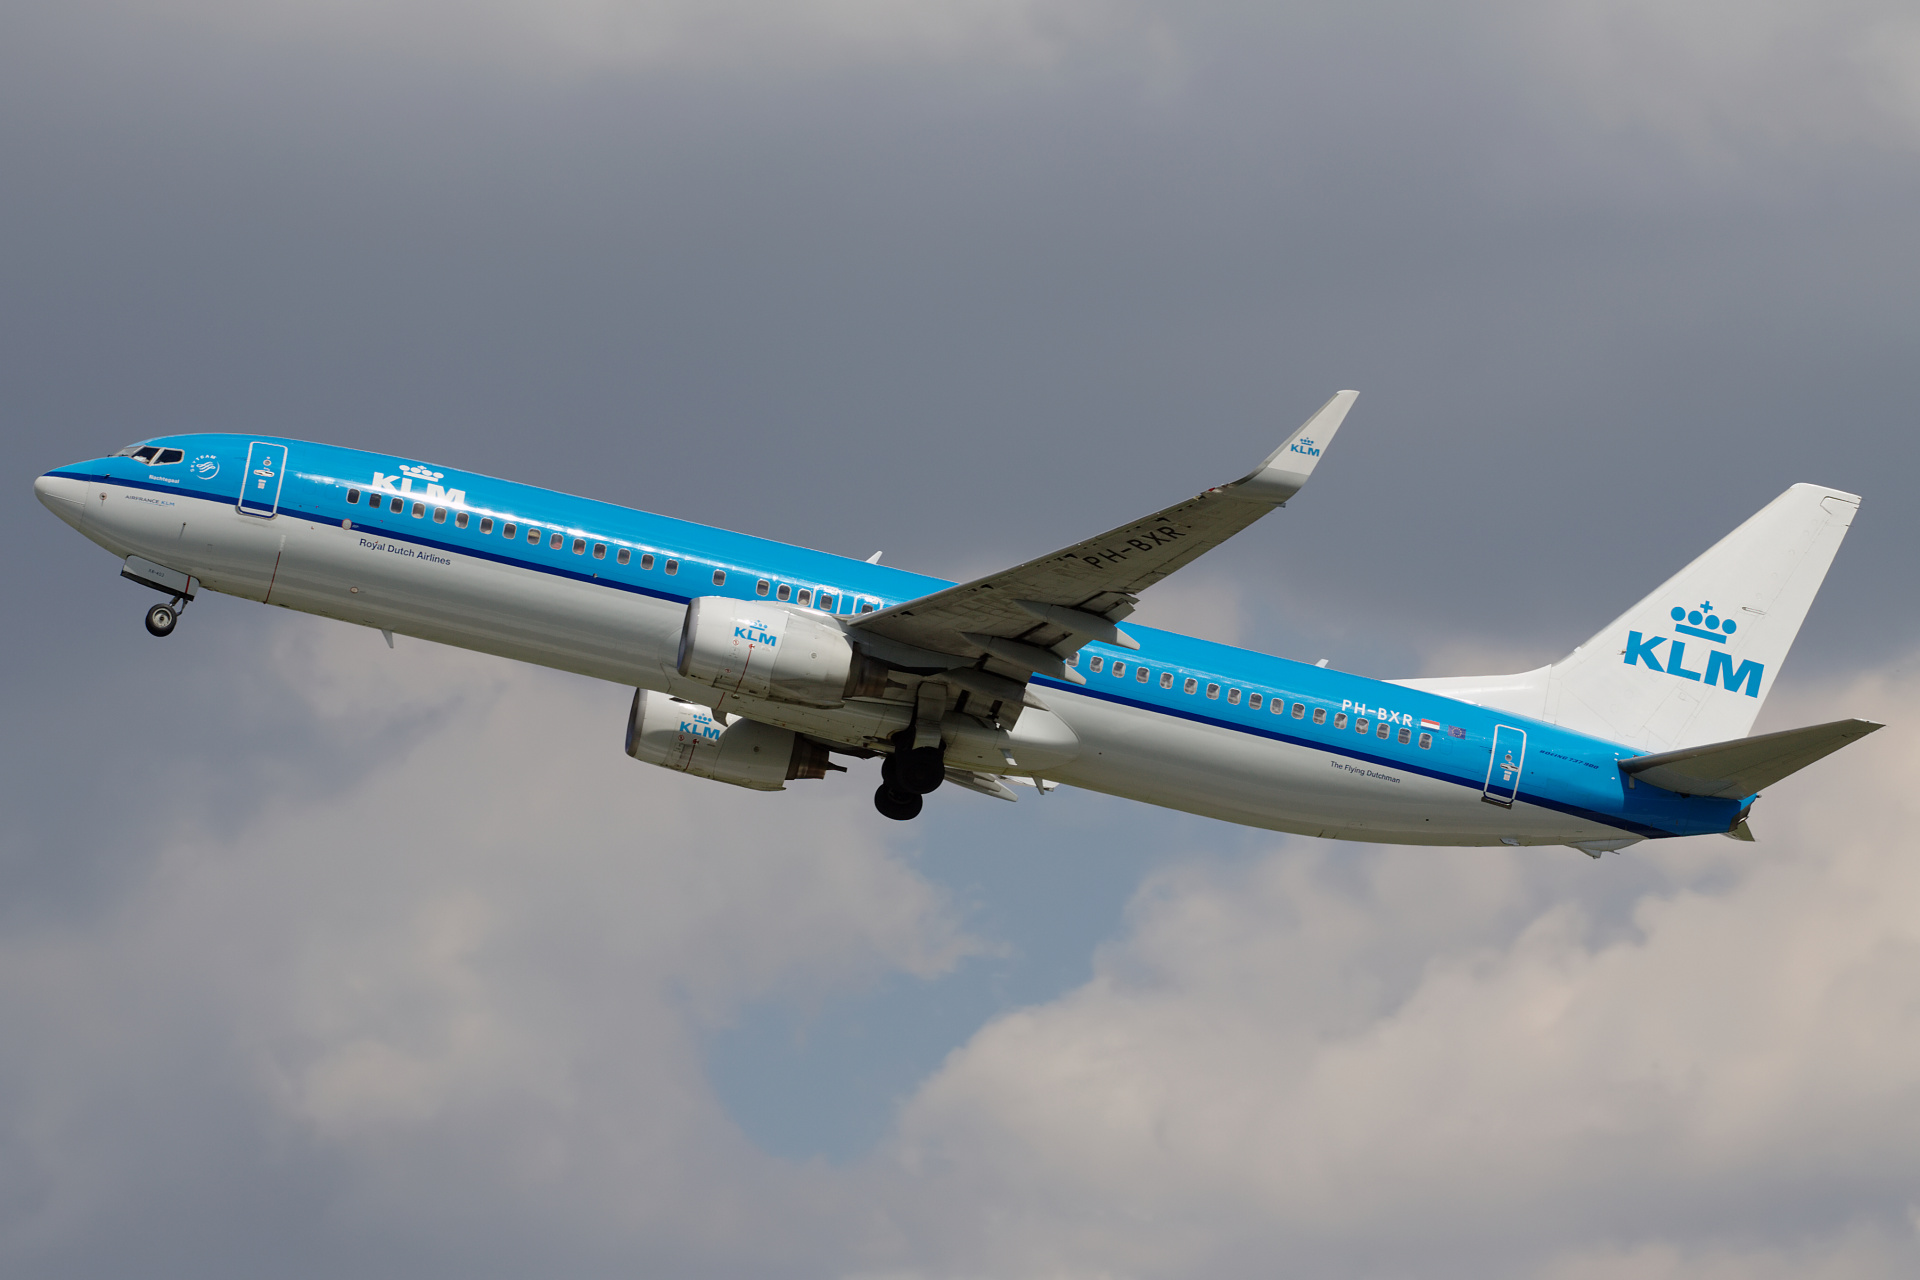 PH-BXR (Aircraft » EPWA Spotting » Boeing 737-900 » KLM Royal Dutch Airlines)